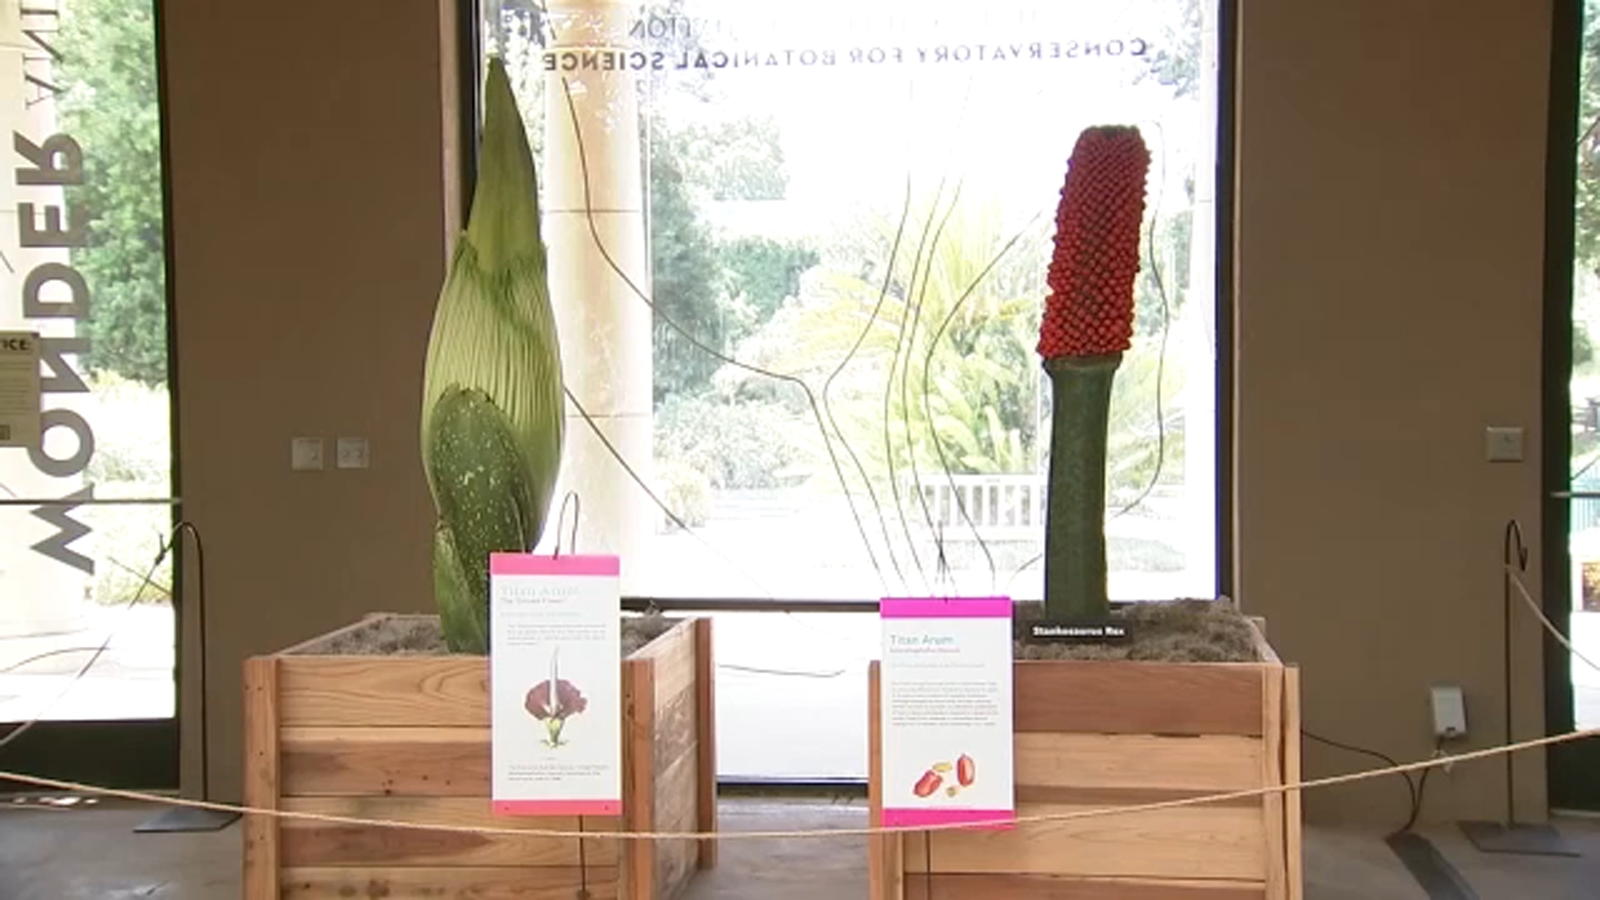 Corpse flower blooming season: Stinky plant on display at The Huntington Botanical Gardens in San Marino [Video]